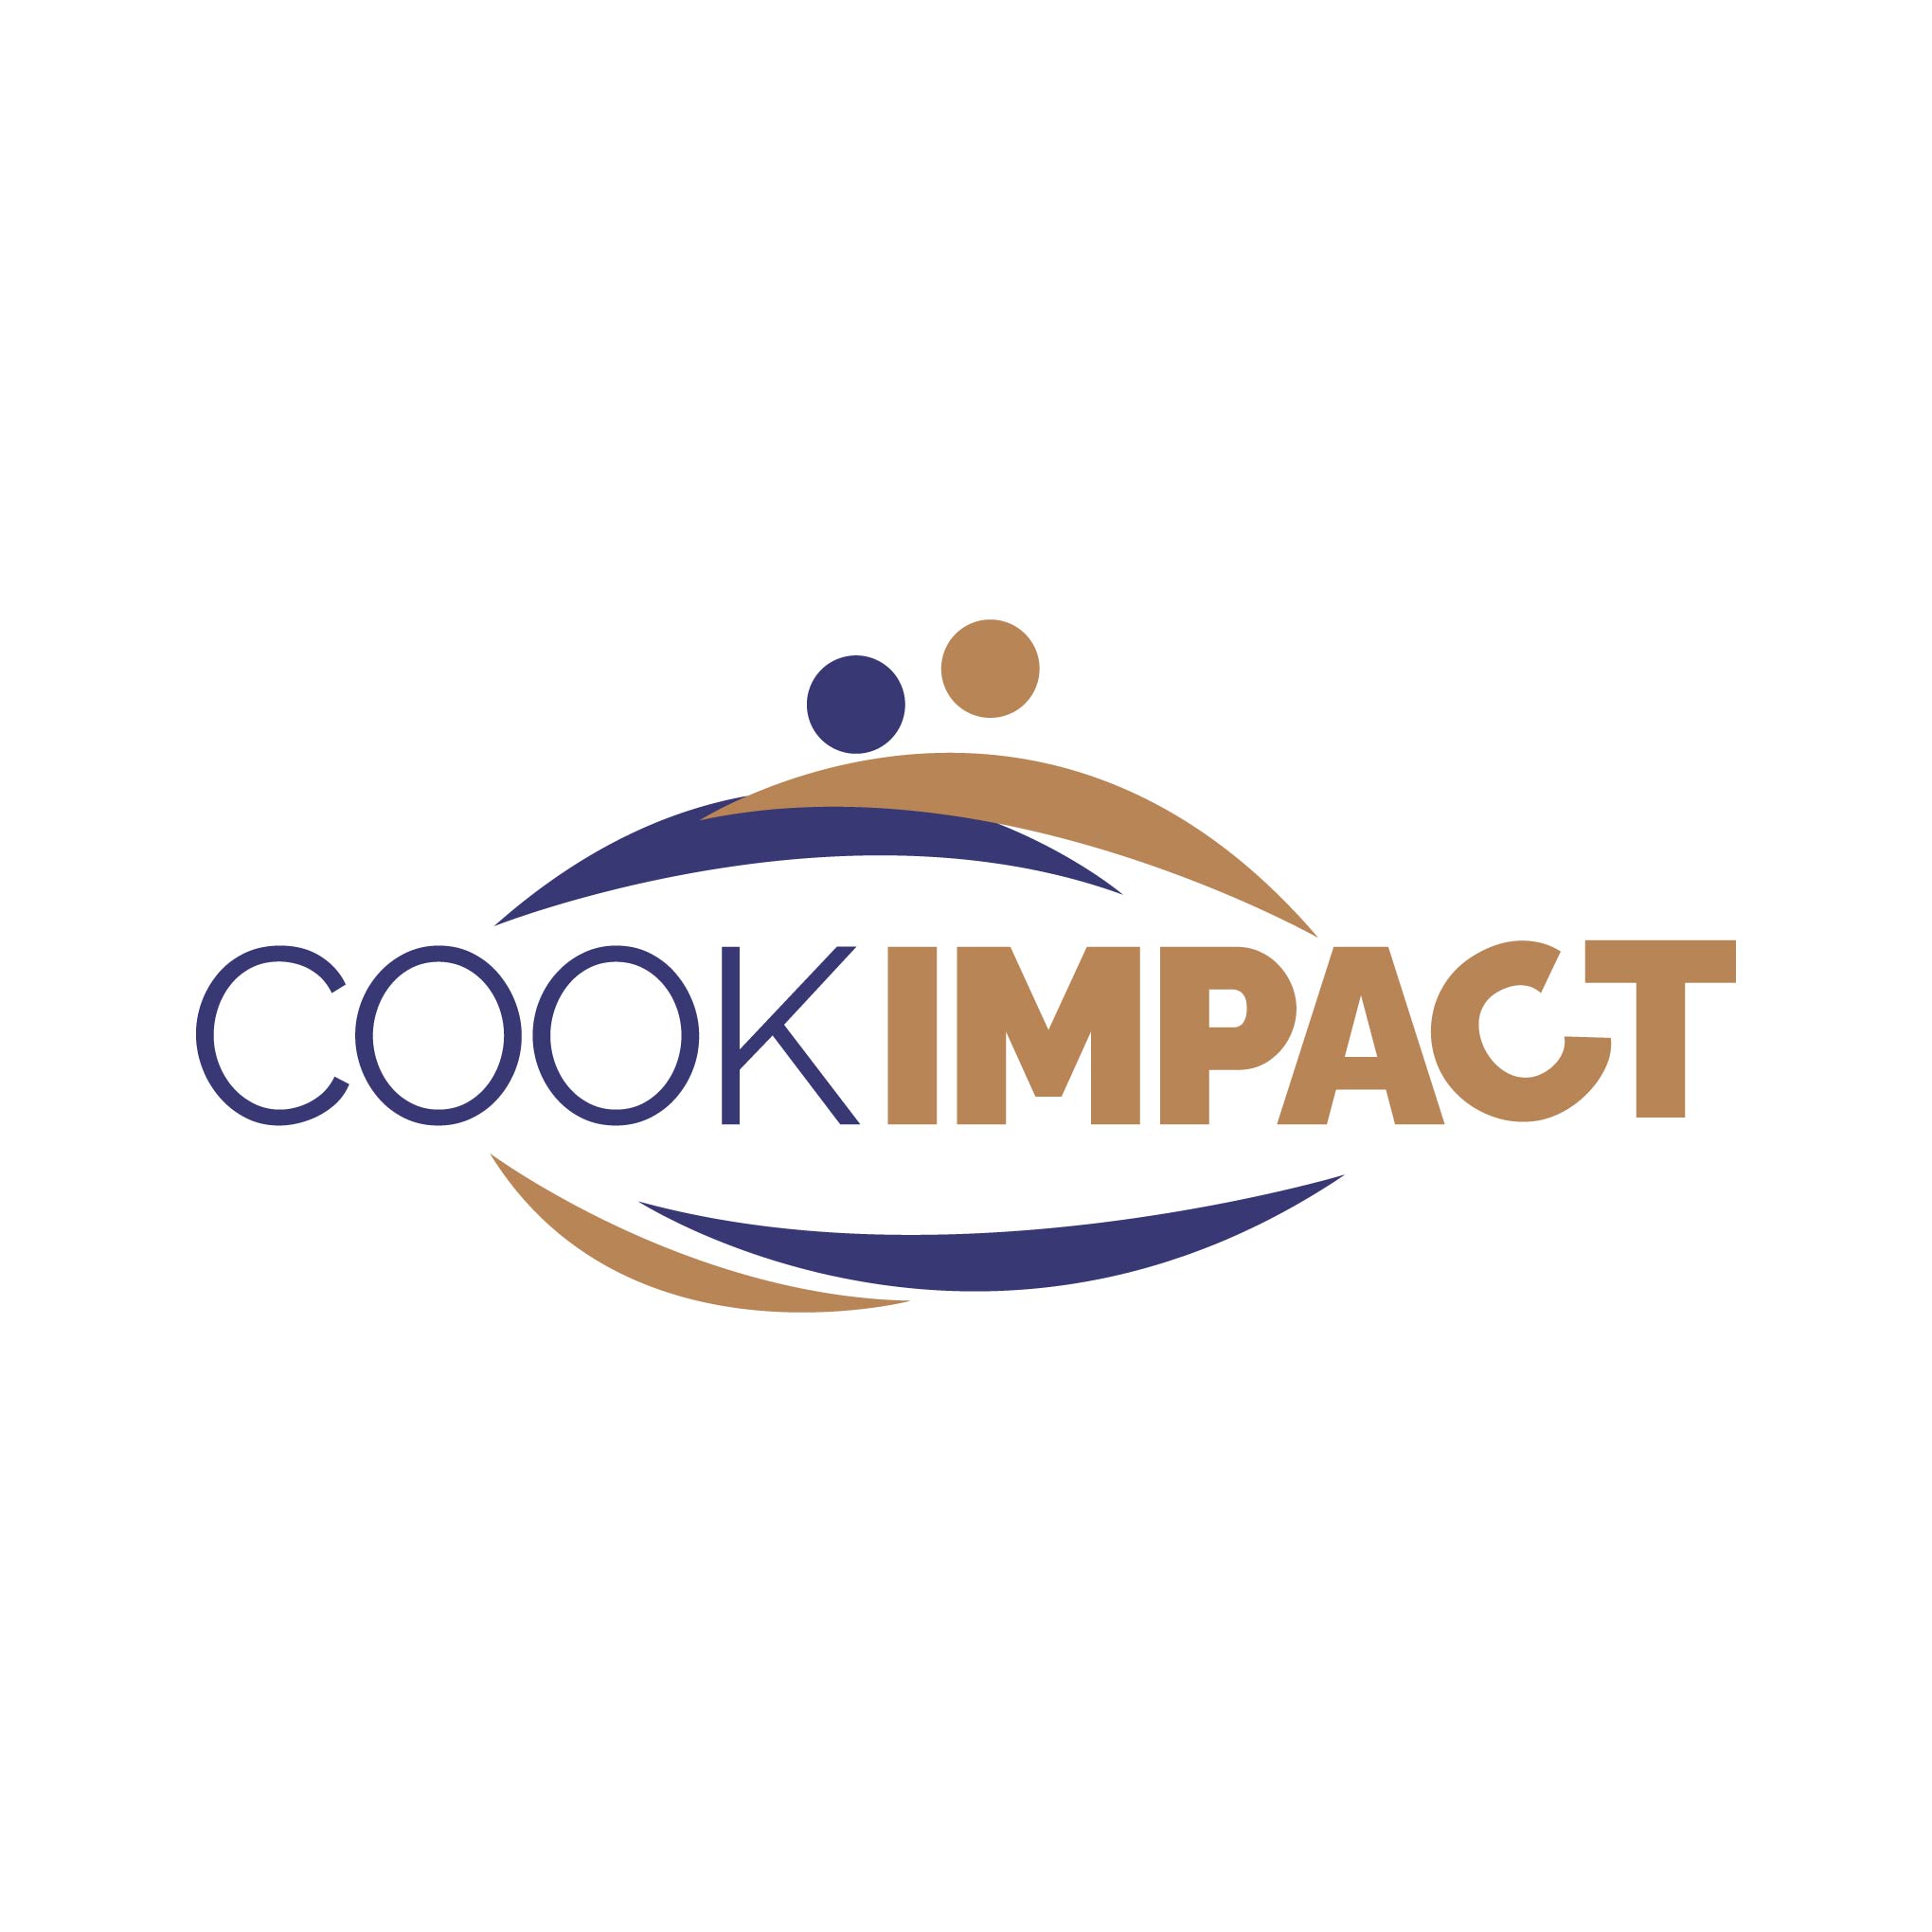 Cook Impact